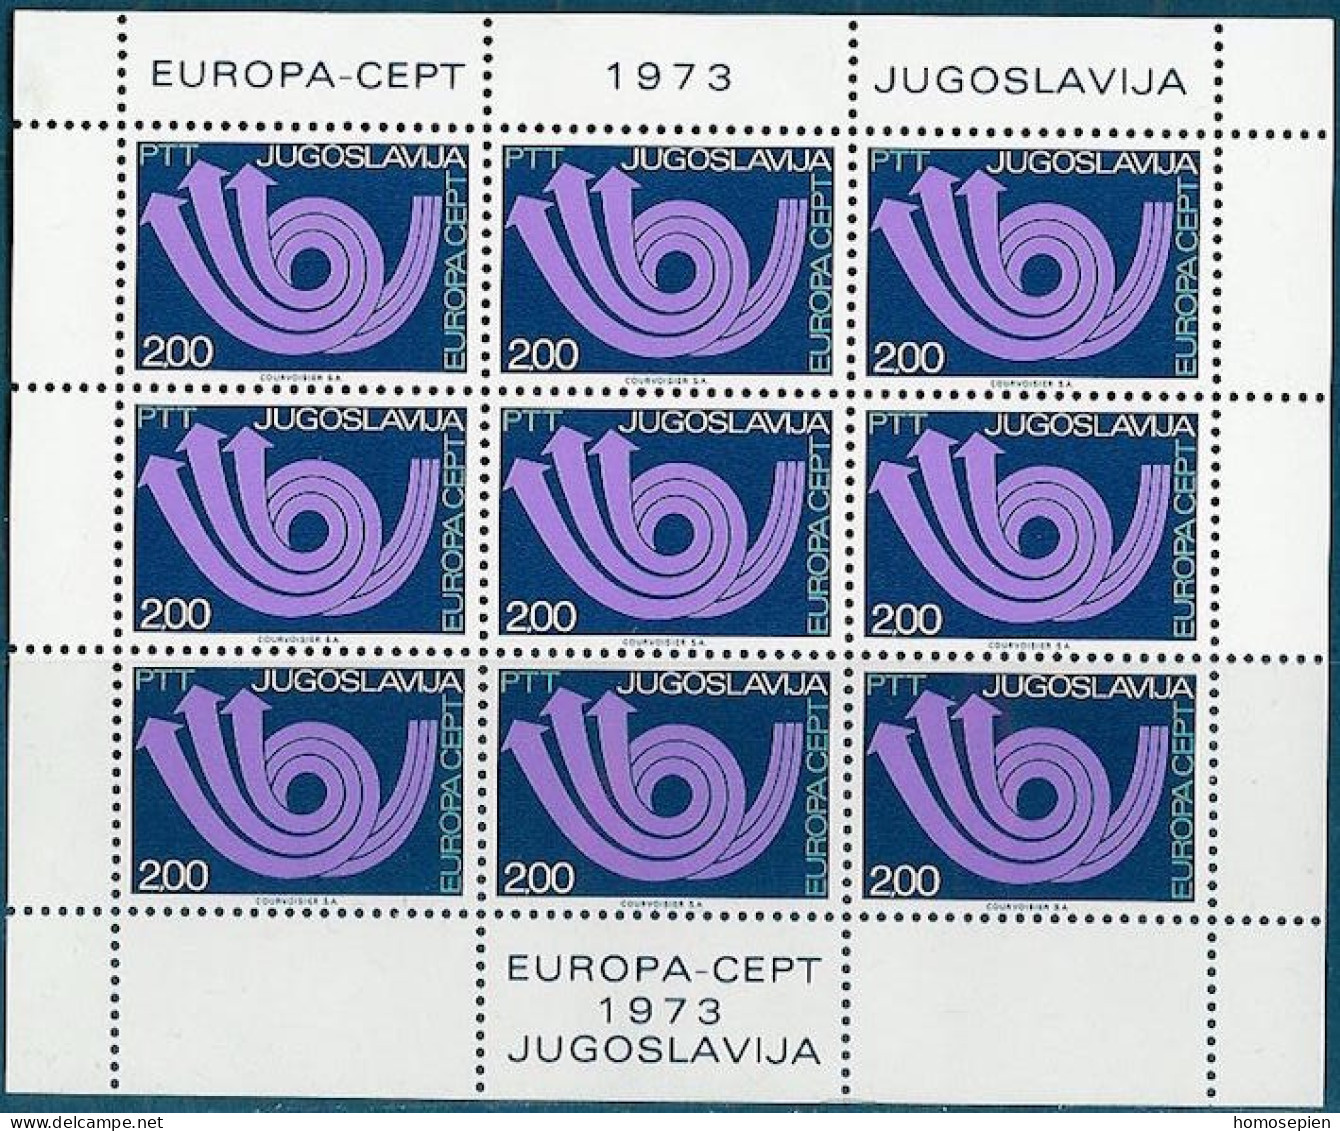 Europa CEPT 1973 Yougoslavie - Jugoslawien - Yugoslavia Y&T N°F1390 à F1391 - Michel N°KB1507 à KB1508 *** - 1973